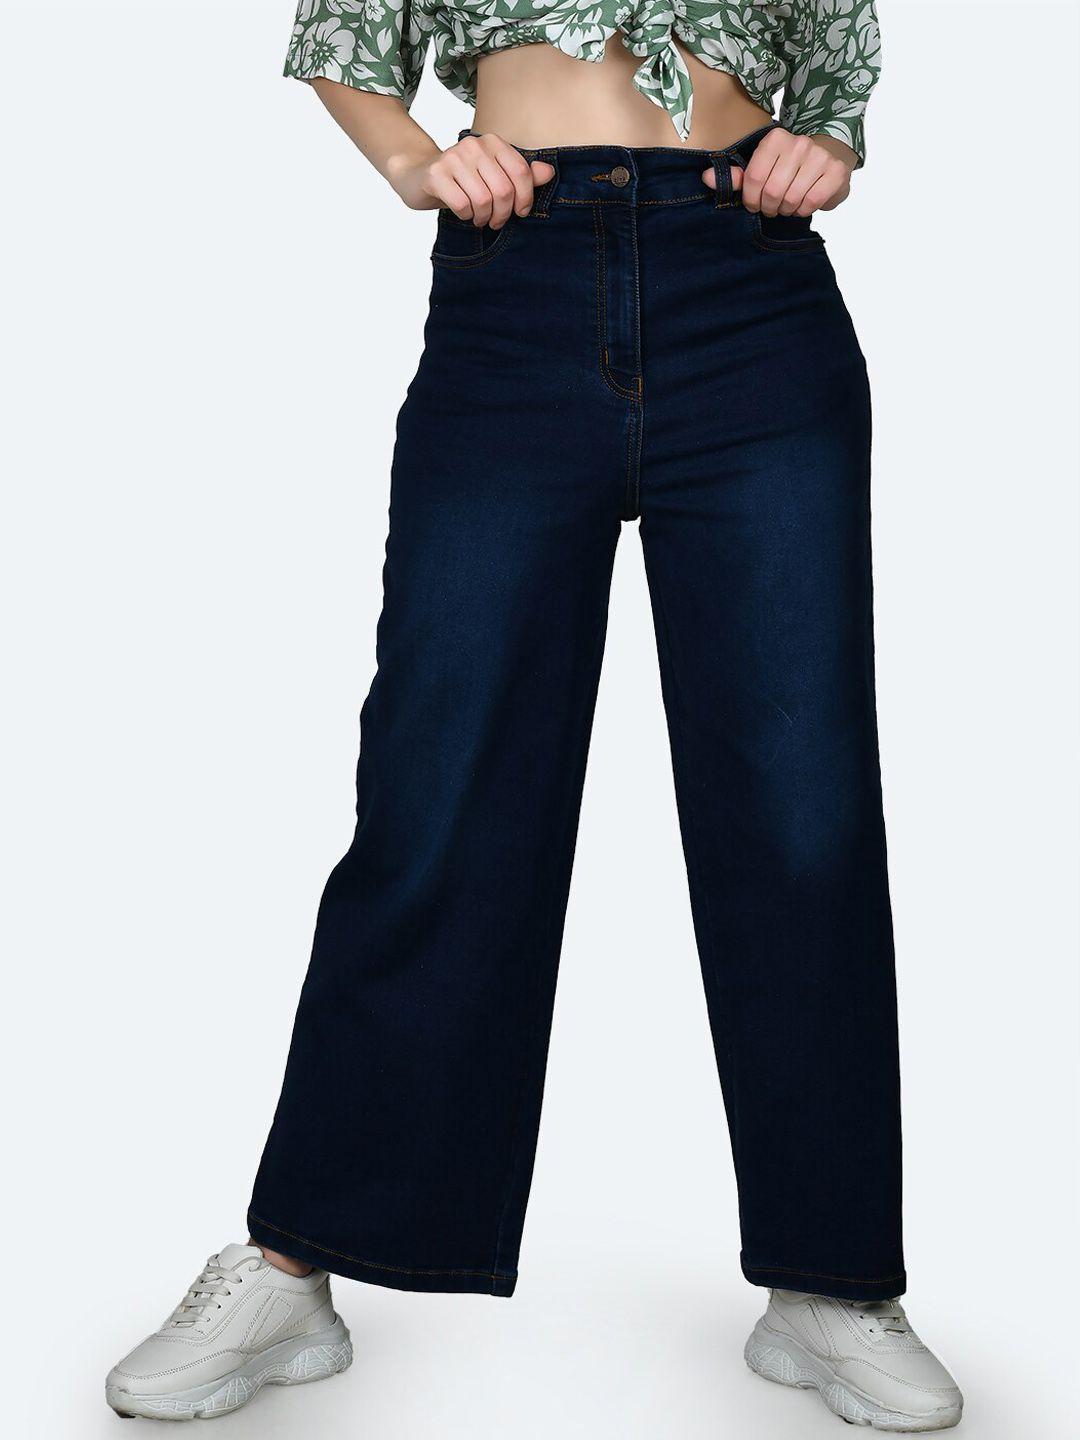 zink london women high-rise jeans